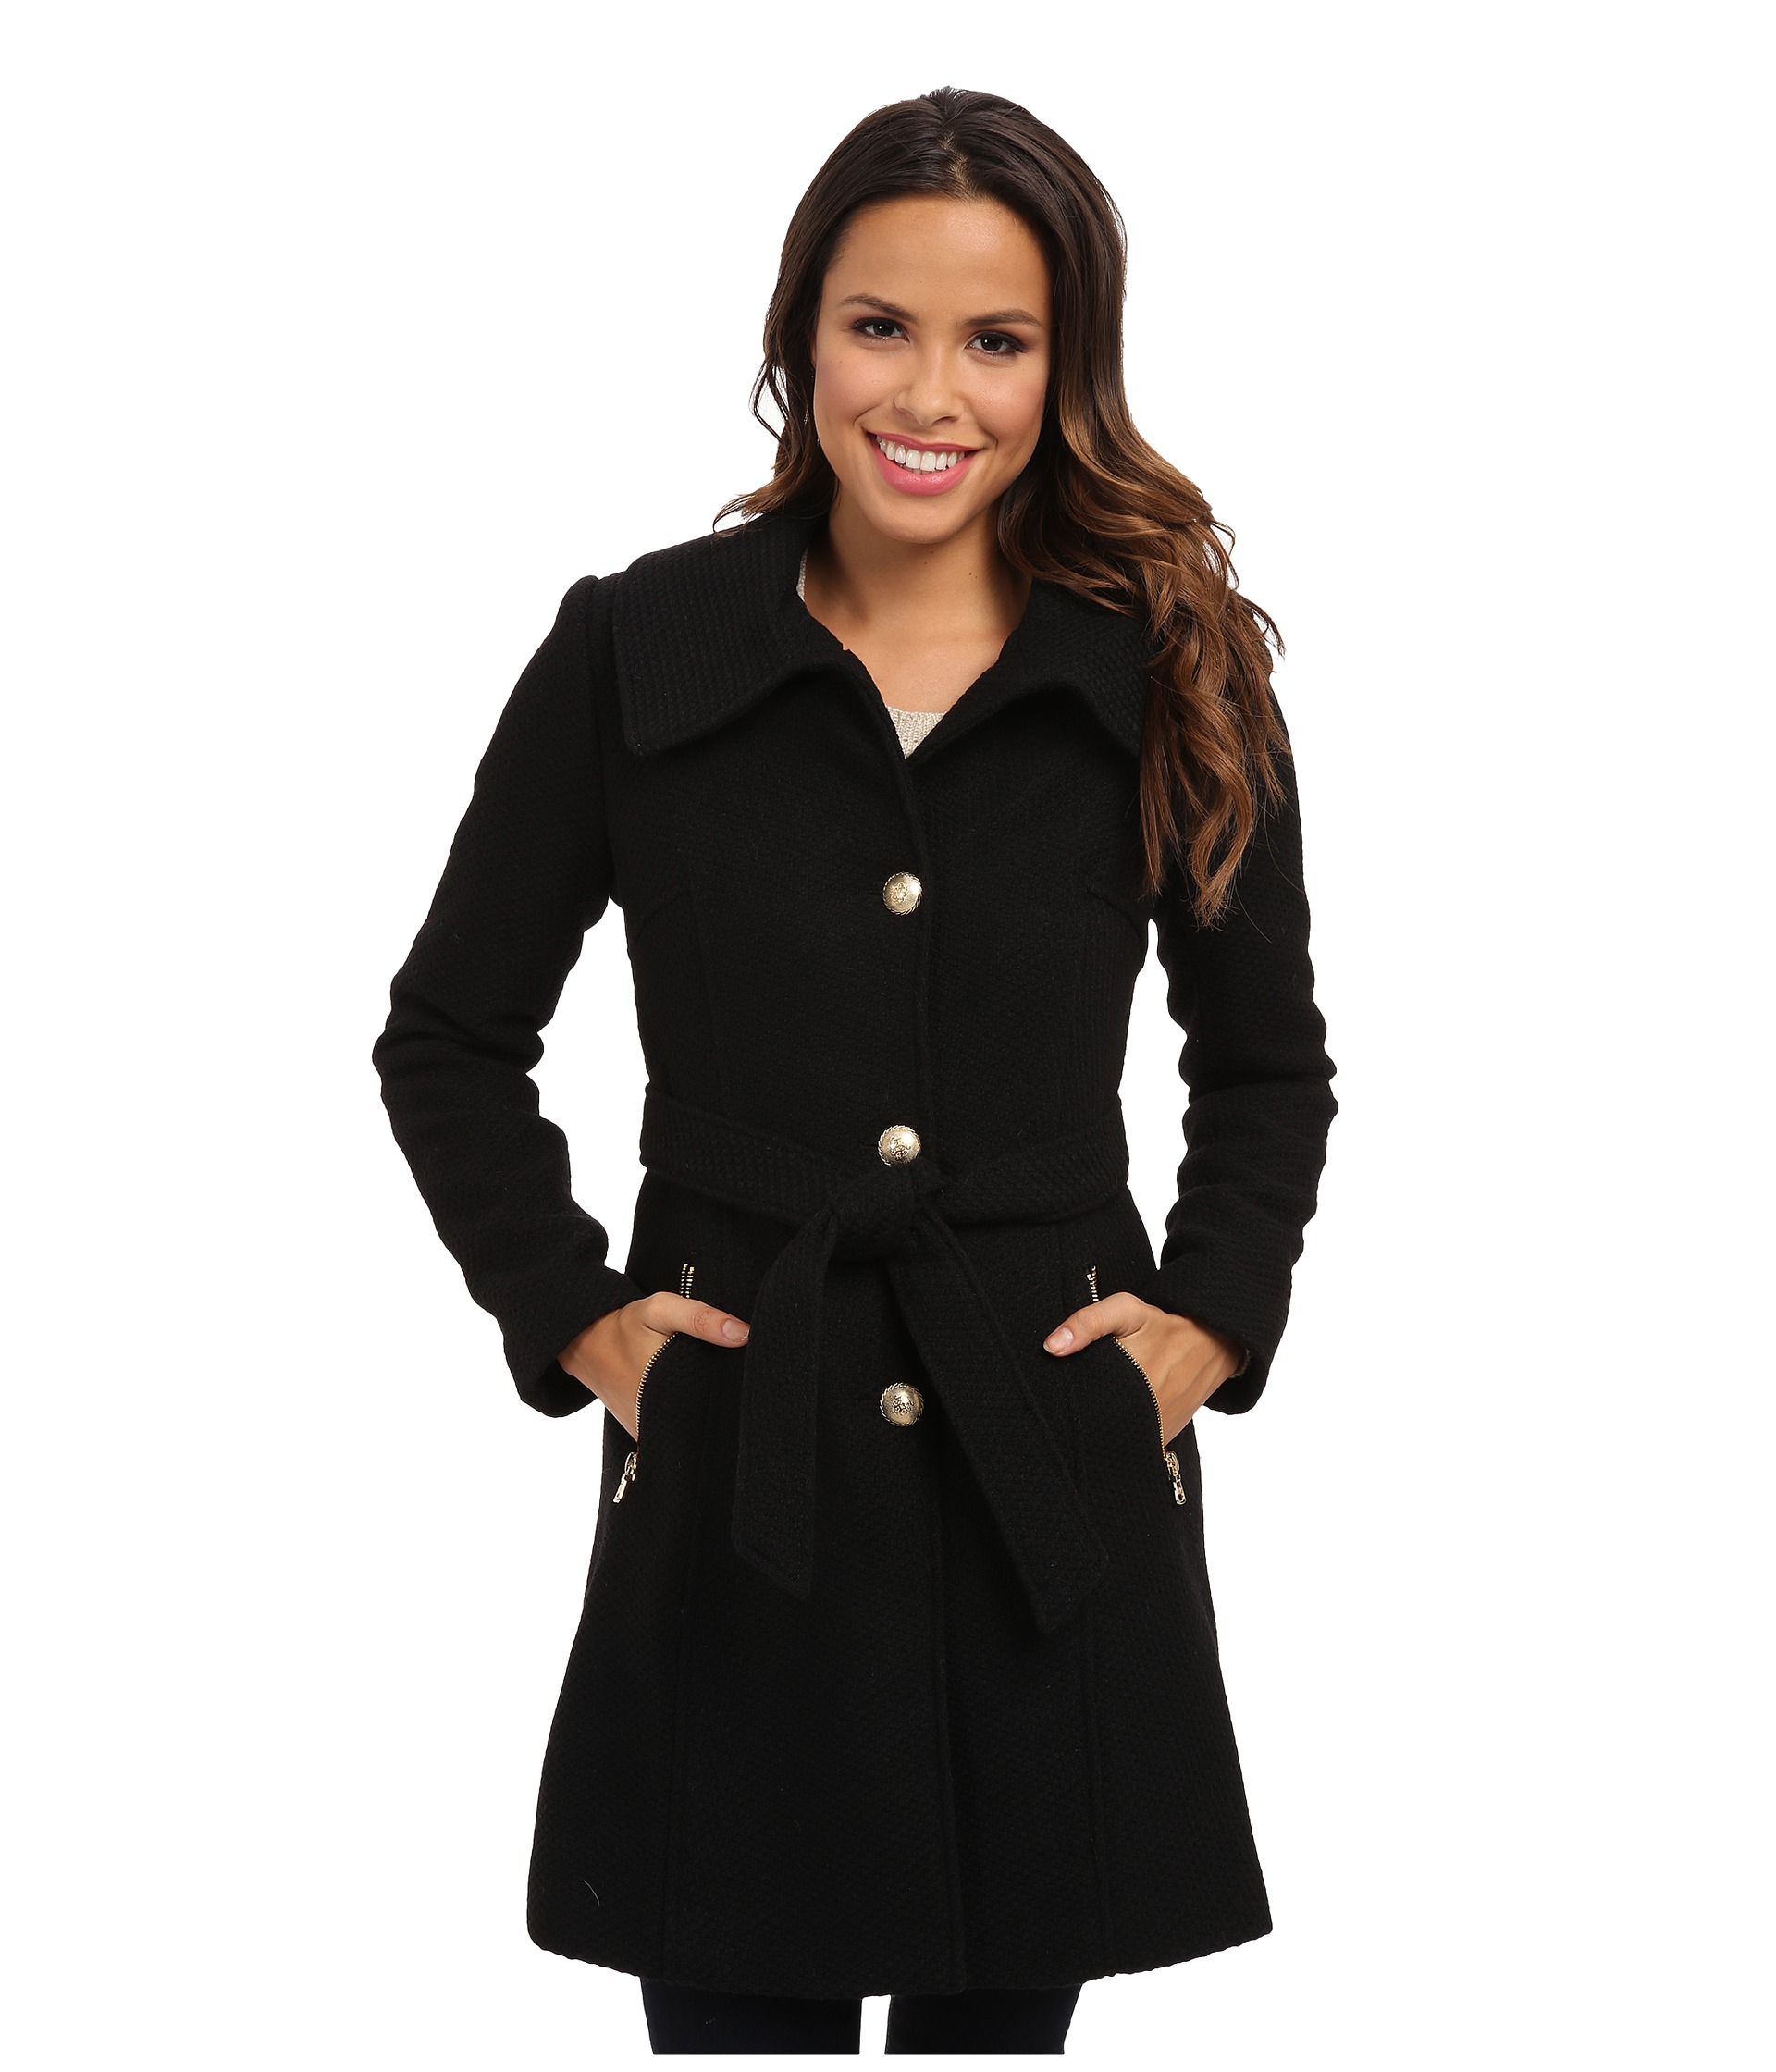 Jessica Simpson Jofmh856 Coat, Clothing, Women | Shipped Free at Zappos